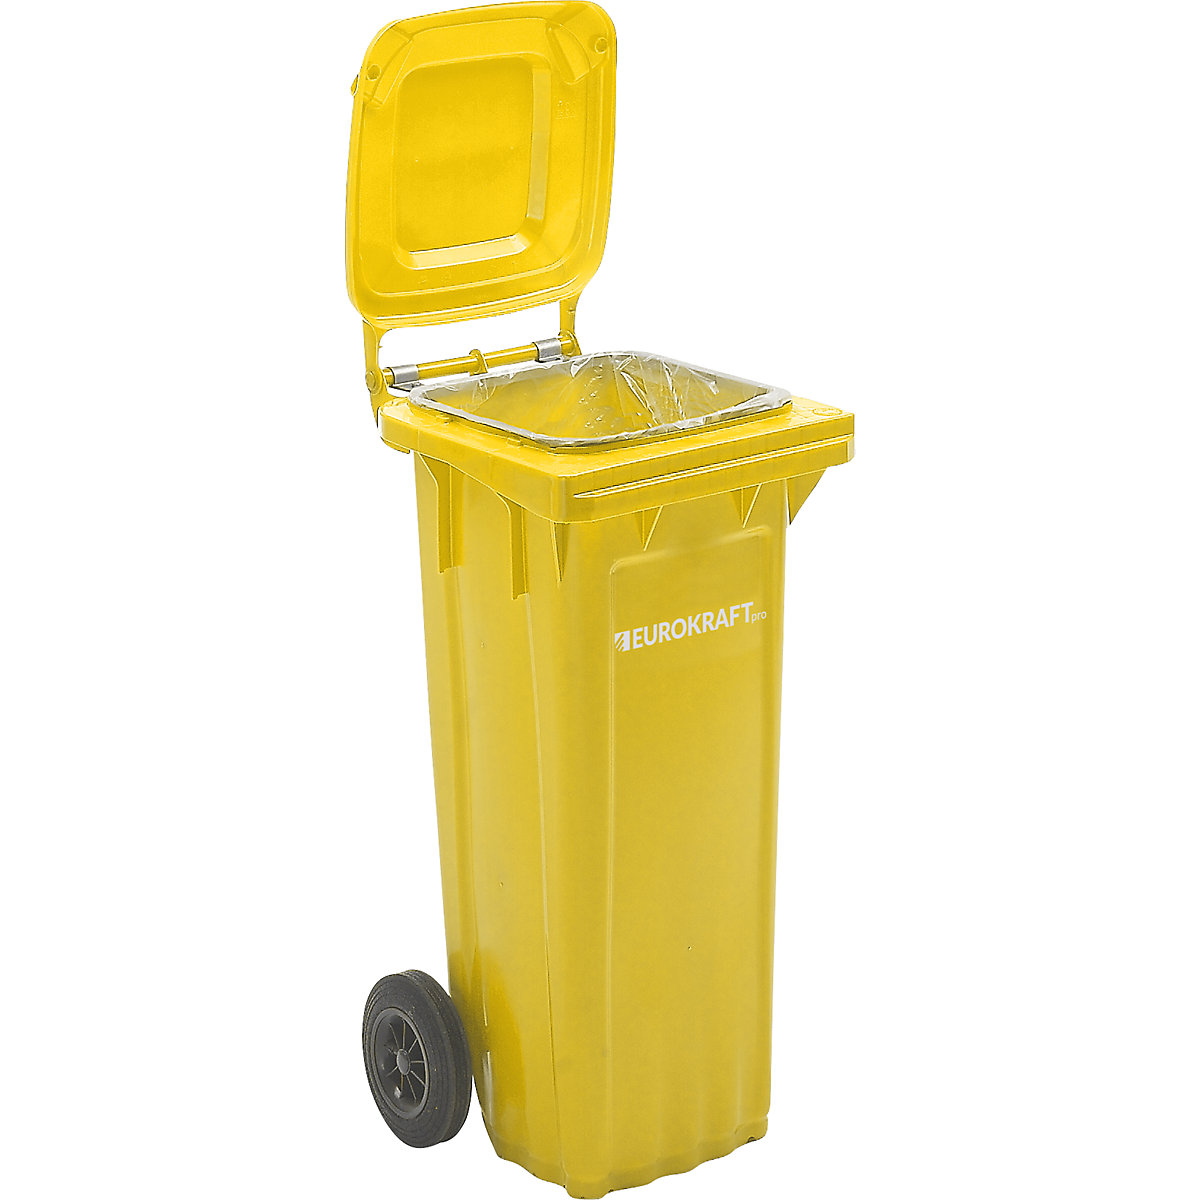 Kanta za smeće od plastike DIN EN 840 – eurokraft pro, volumen 80 l, ŠxVxD 448 x 932 x 514 mm, u žutoj boji, od 5 kom.-8